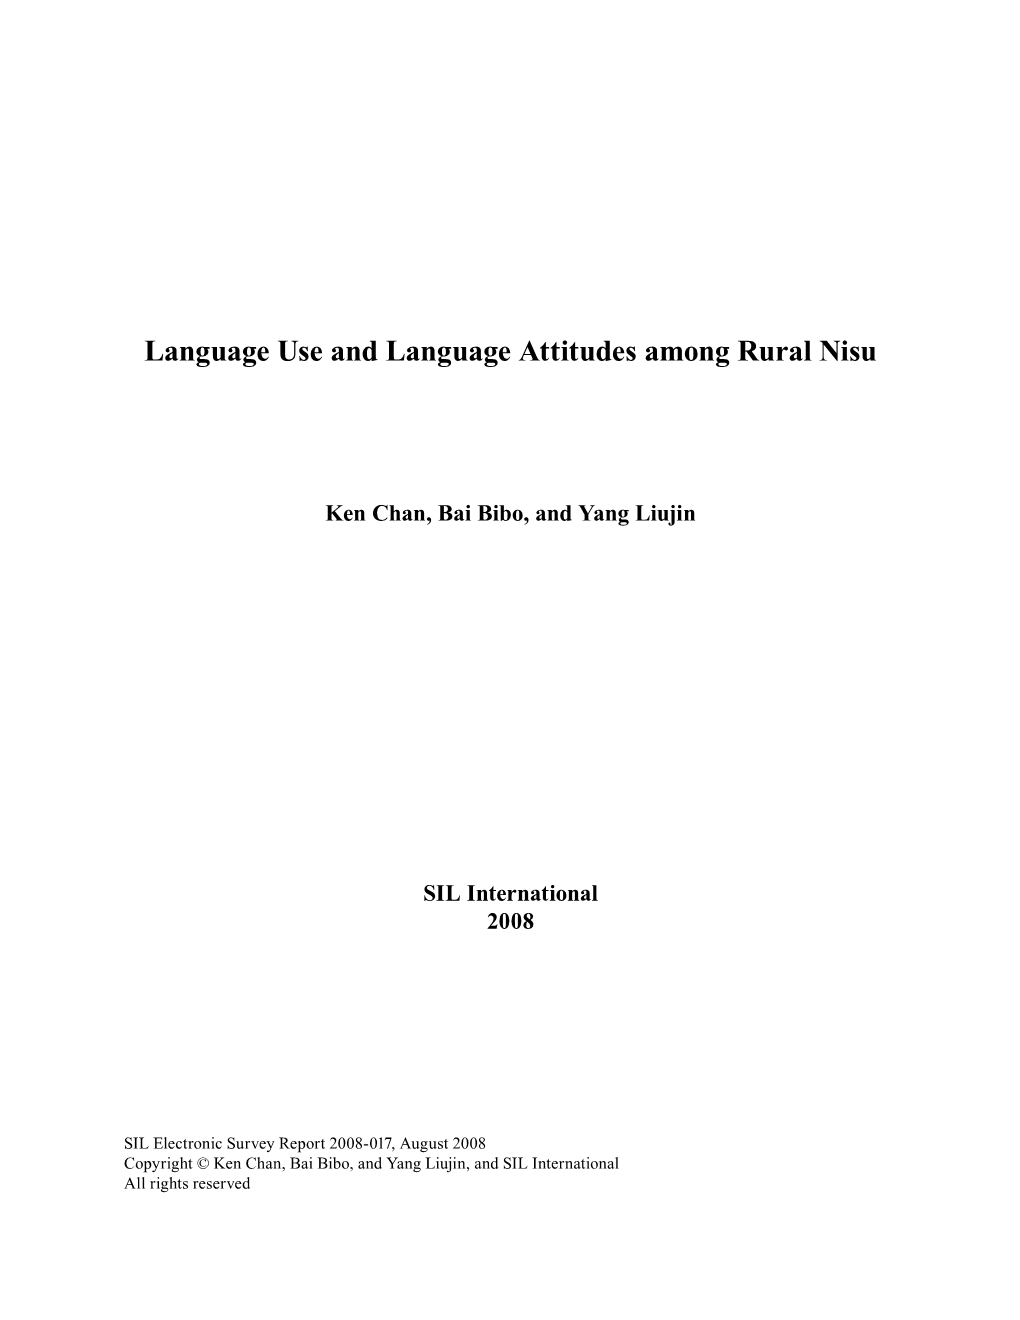 Language Use and Language Attitudes Among Rural Nisu